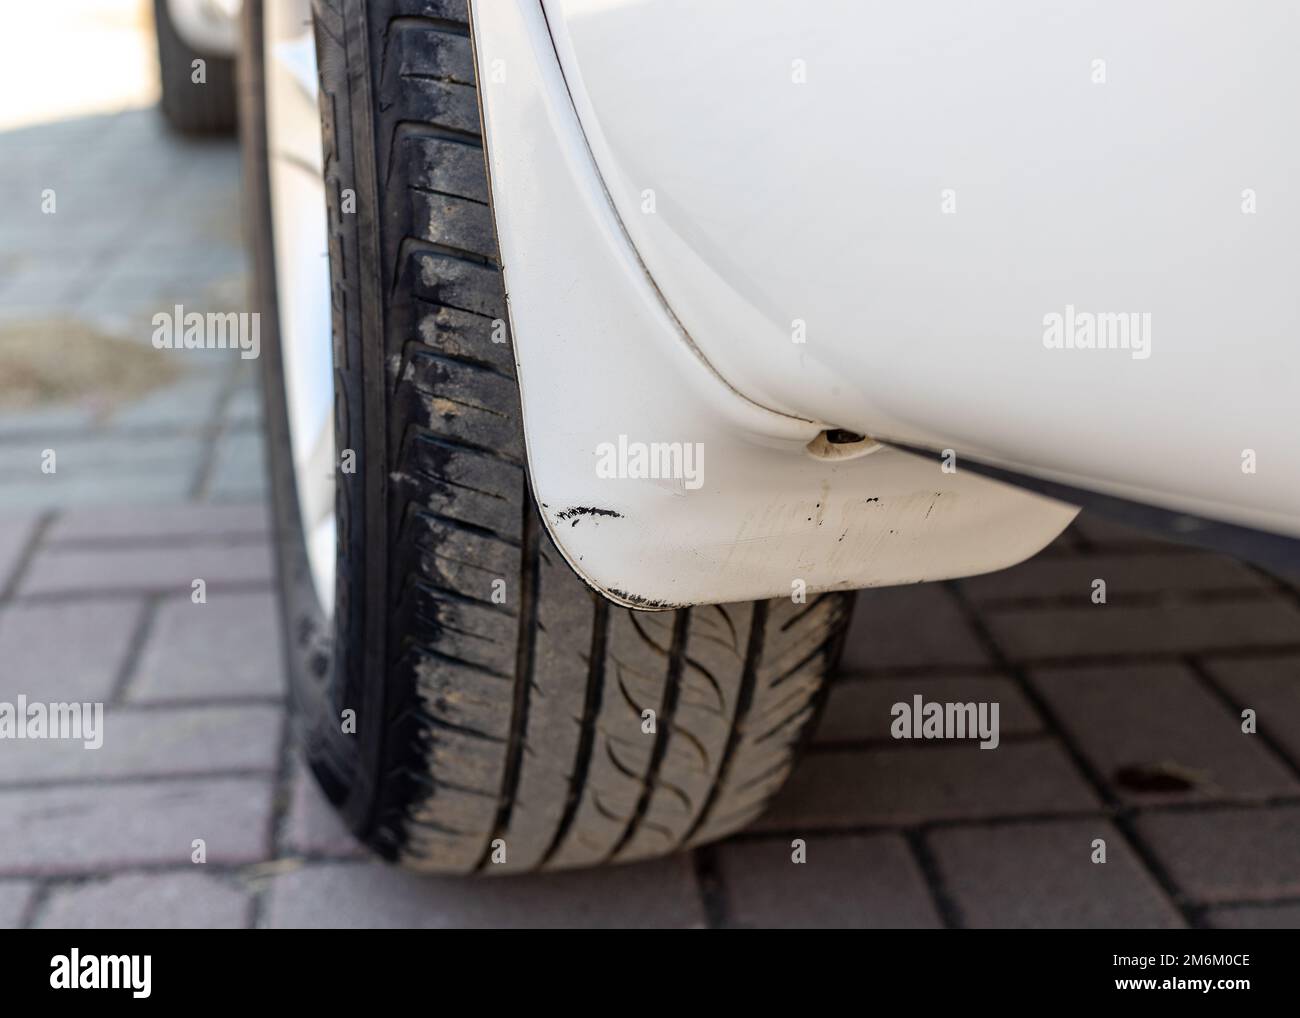 Car mudguard or mudflap of a rear wheel Stock Photo